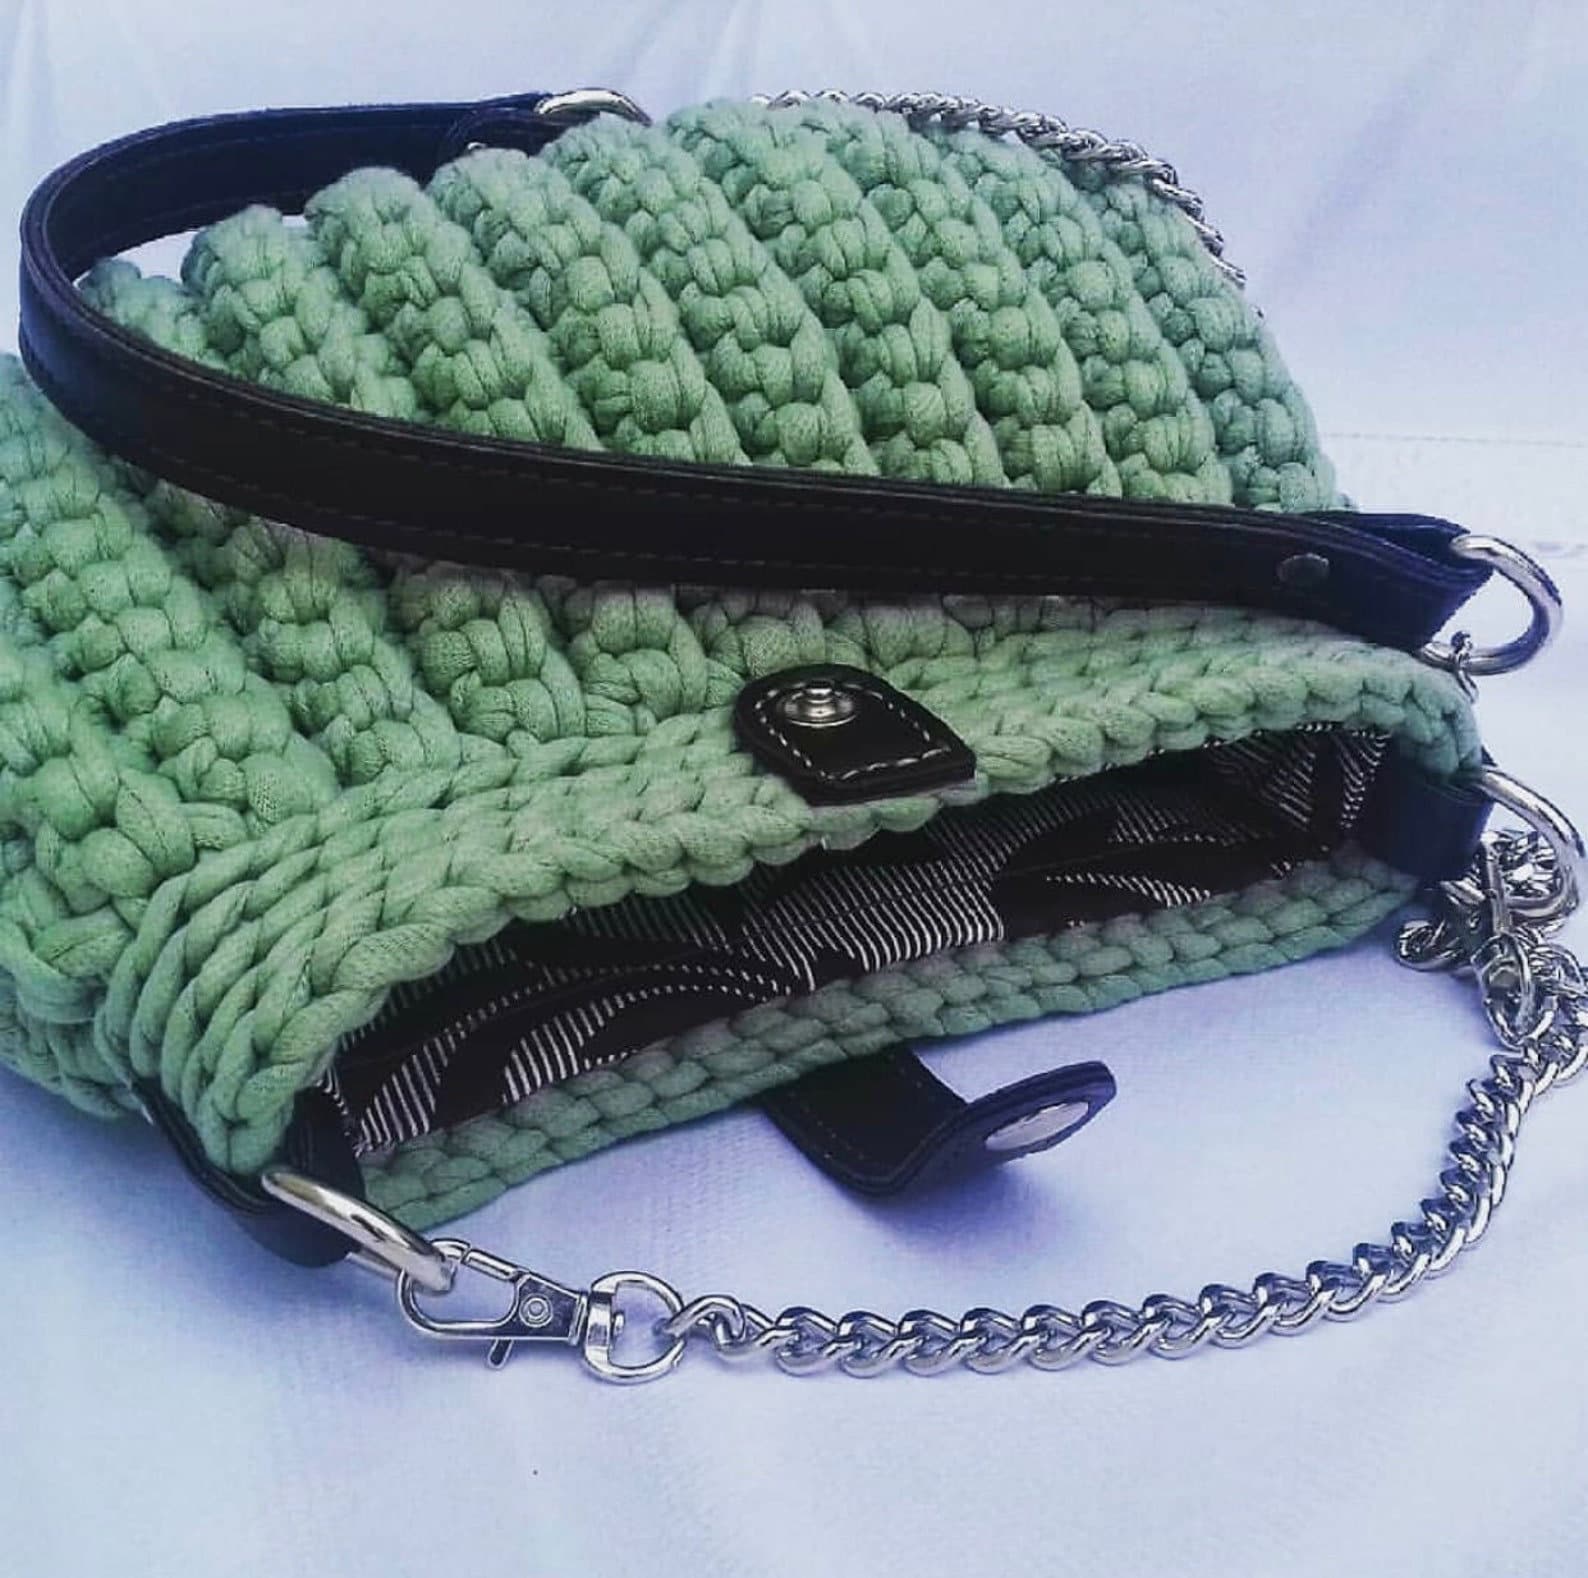  Myya DIY Belt Buckle Screws Hook Replacement for Repair Belts  Handbag Accessories : Arts, Crafts & Sewing